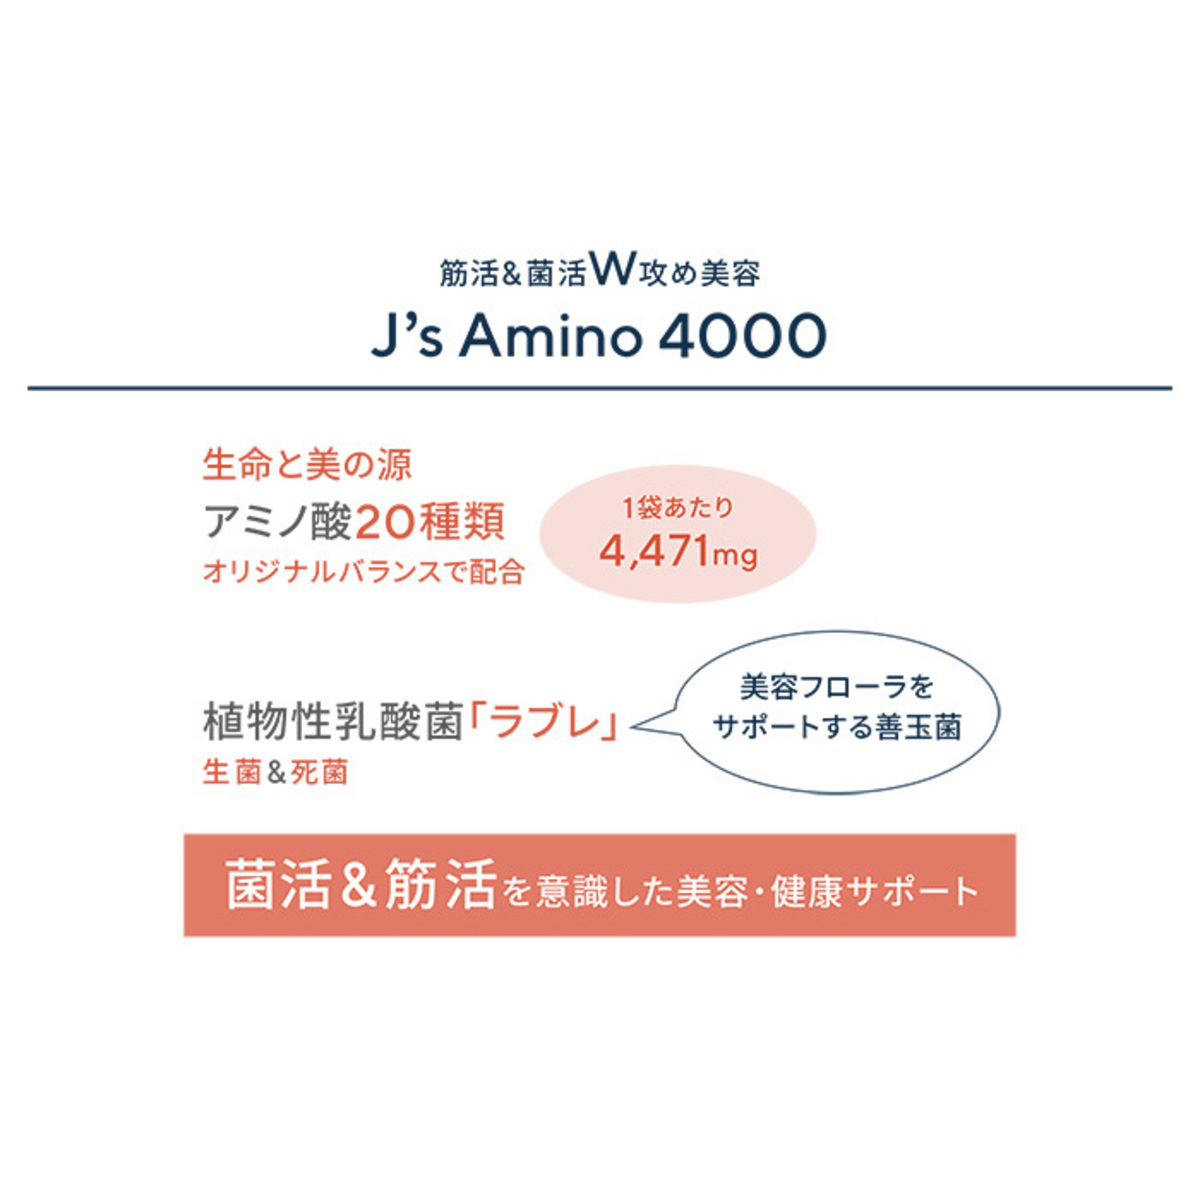 J’s Amino 4000 90包セット - QVC.jp